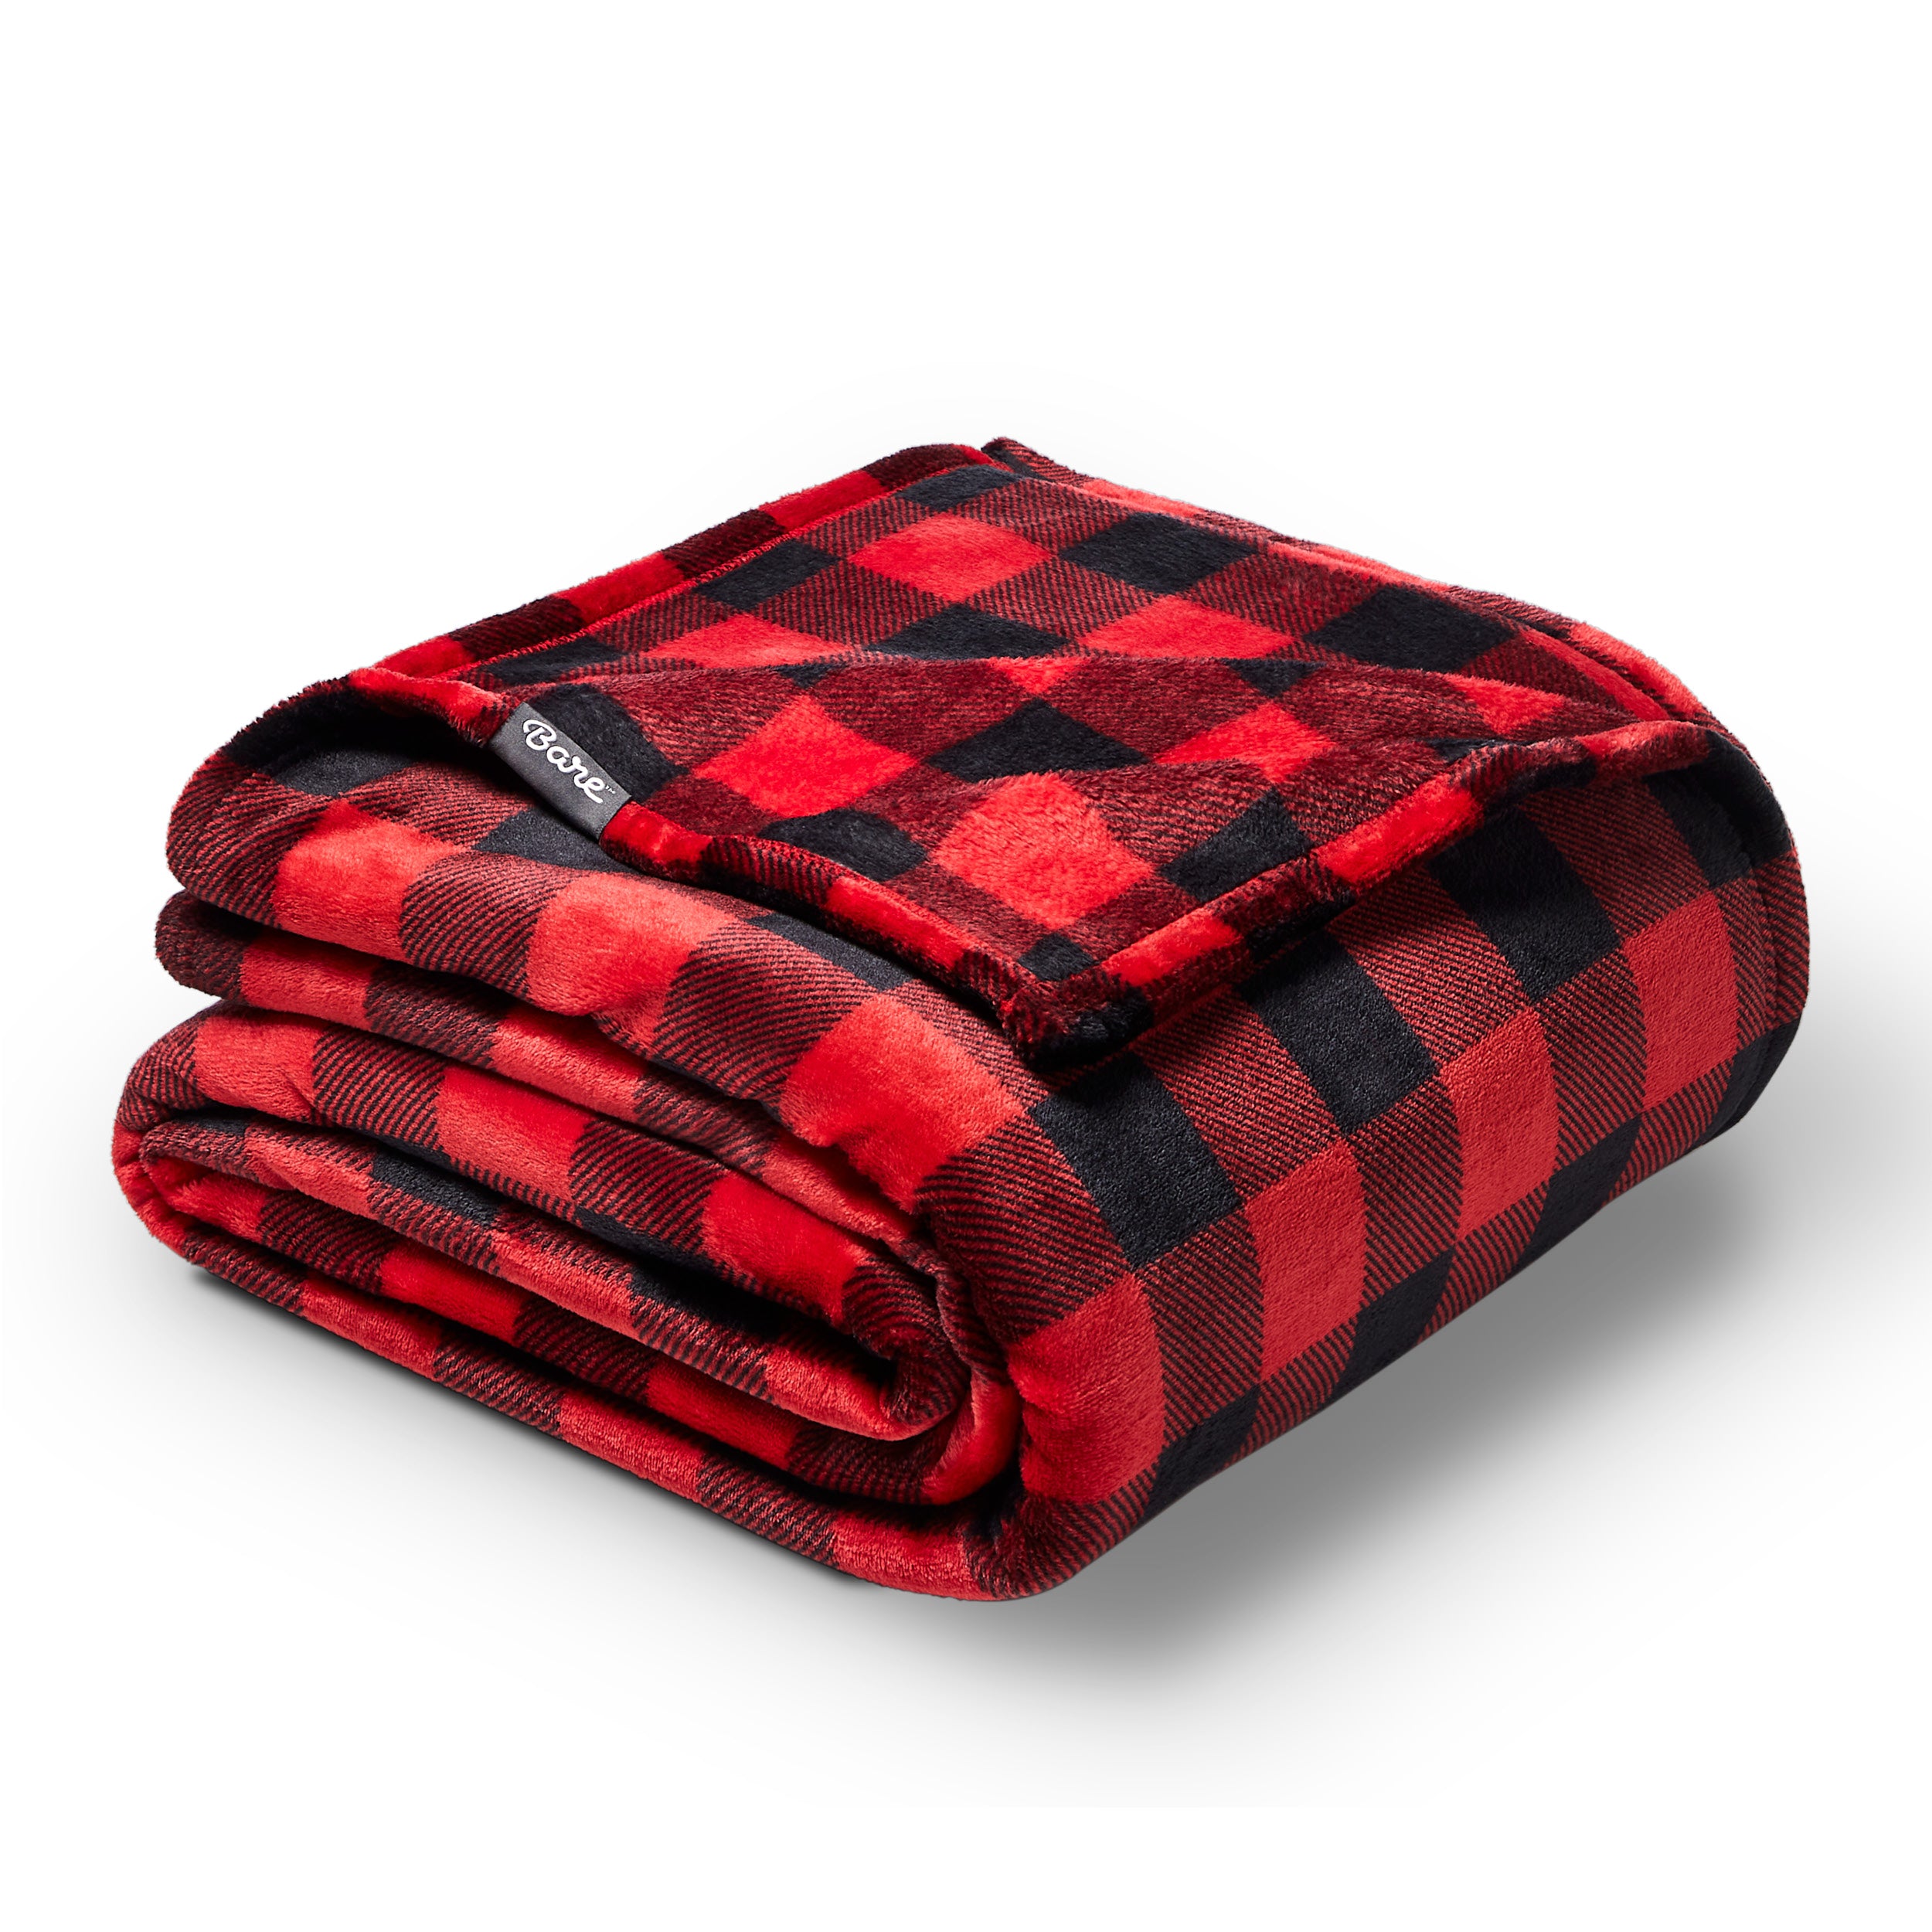 Buffalo Plaid microplush blanket folded neatly